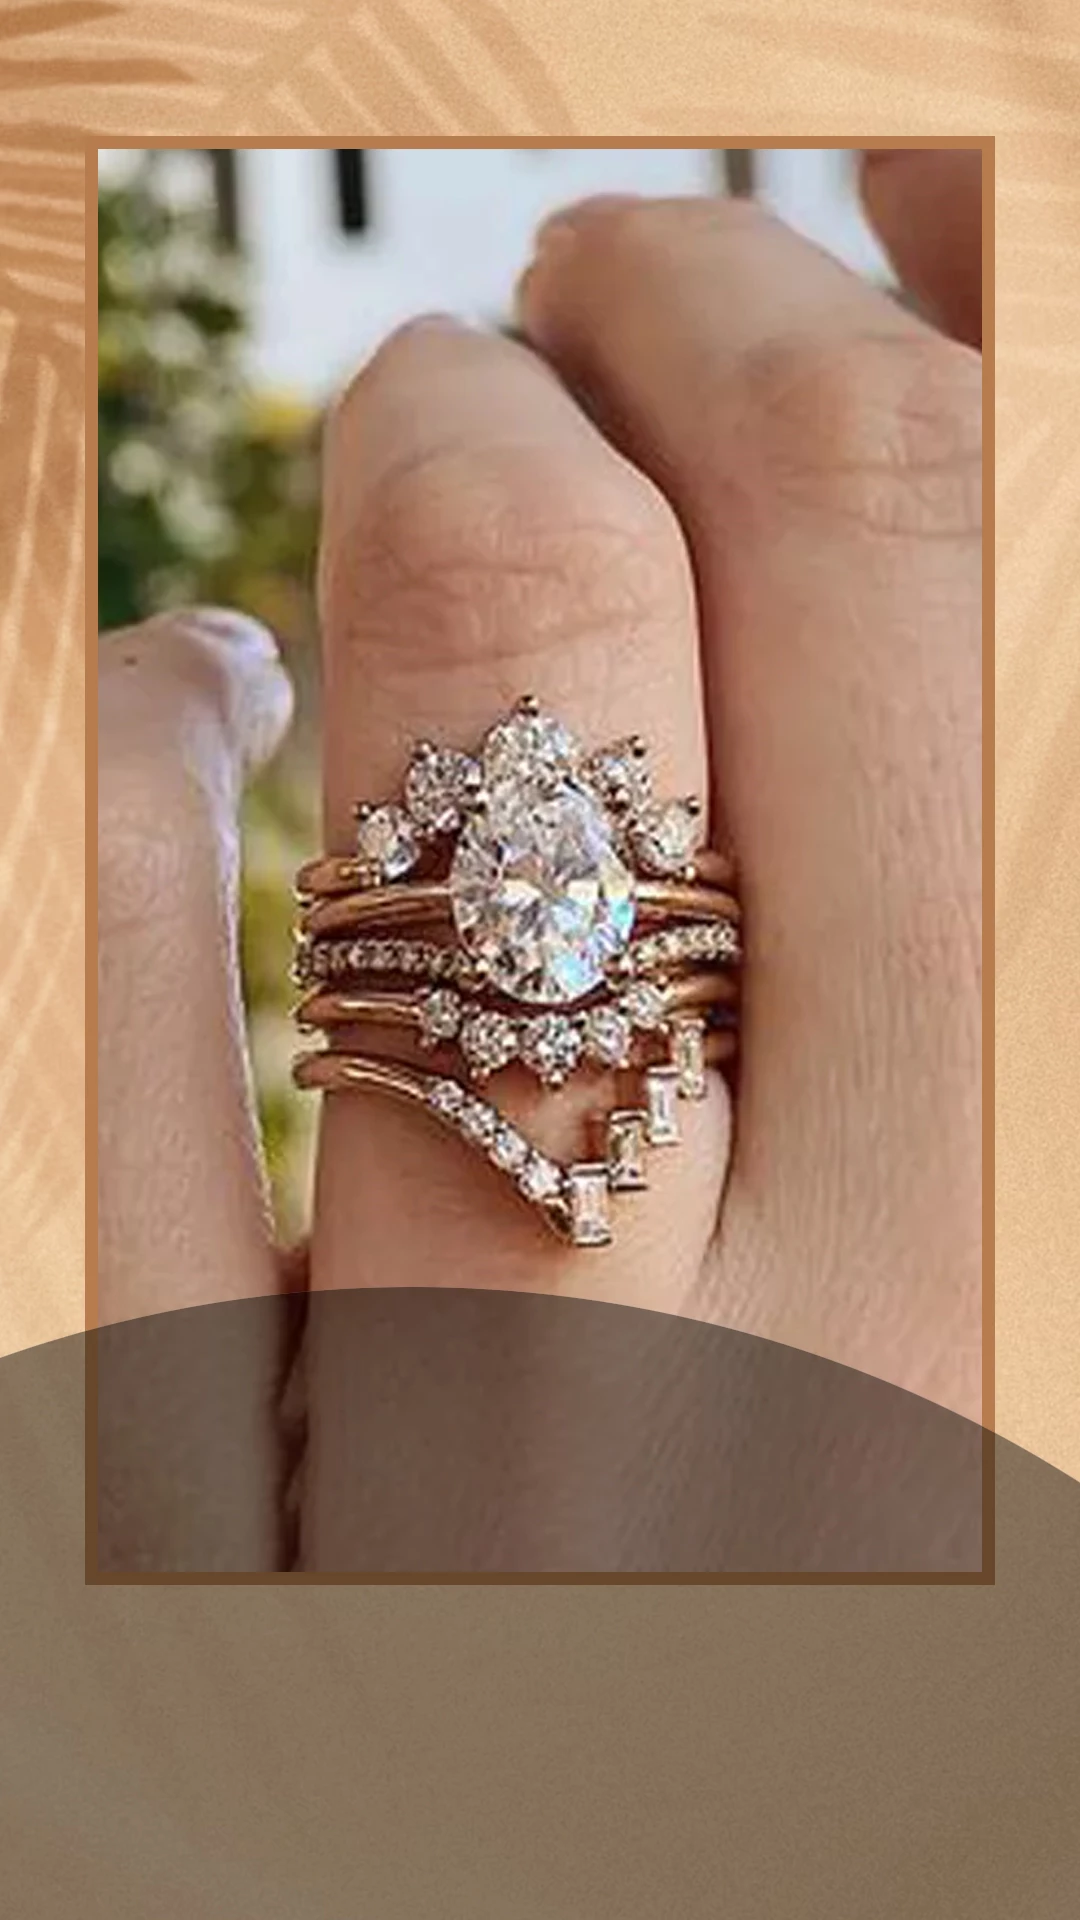 Trilogy Engagement Ring & Wedding Band | Trilogy engagement ring, Wedding  ring bands, Future engagement rings